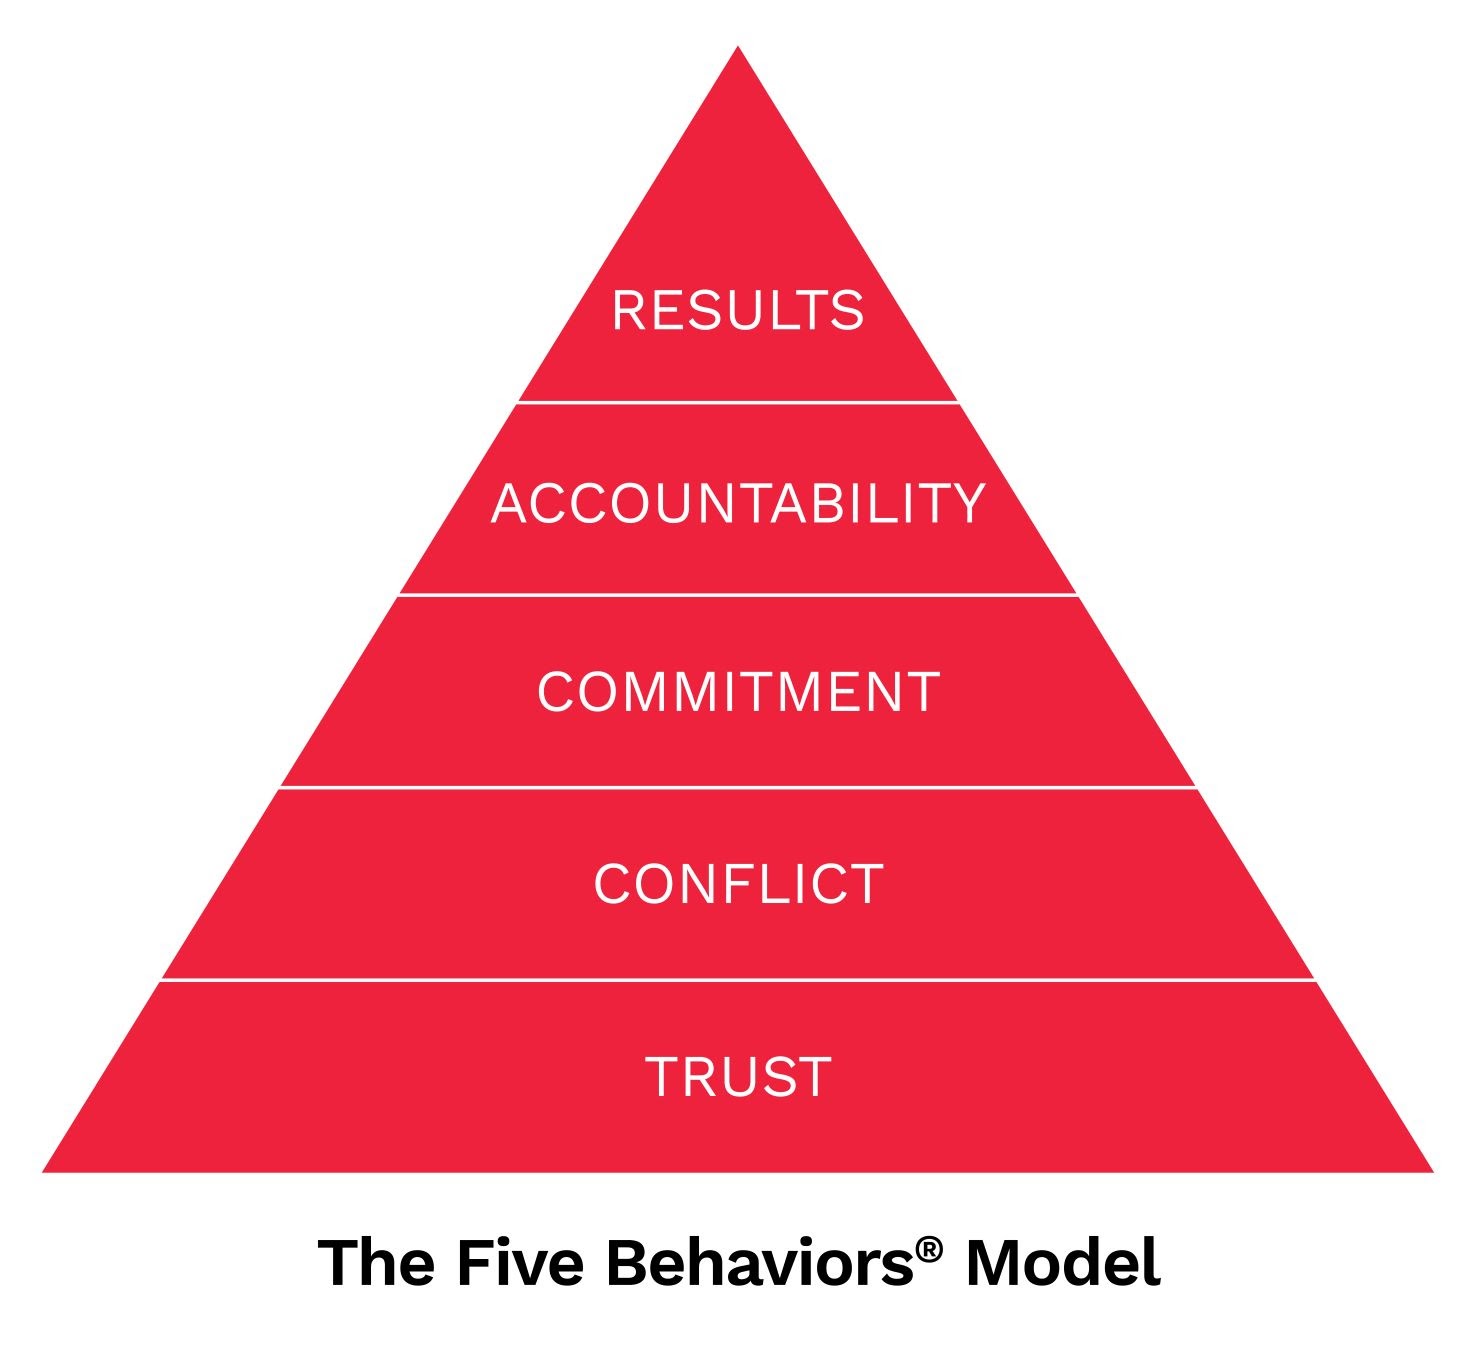 The Five Behaviors Model